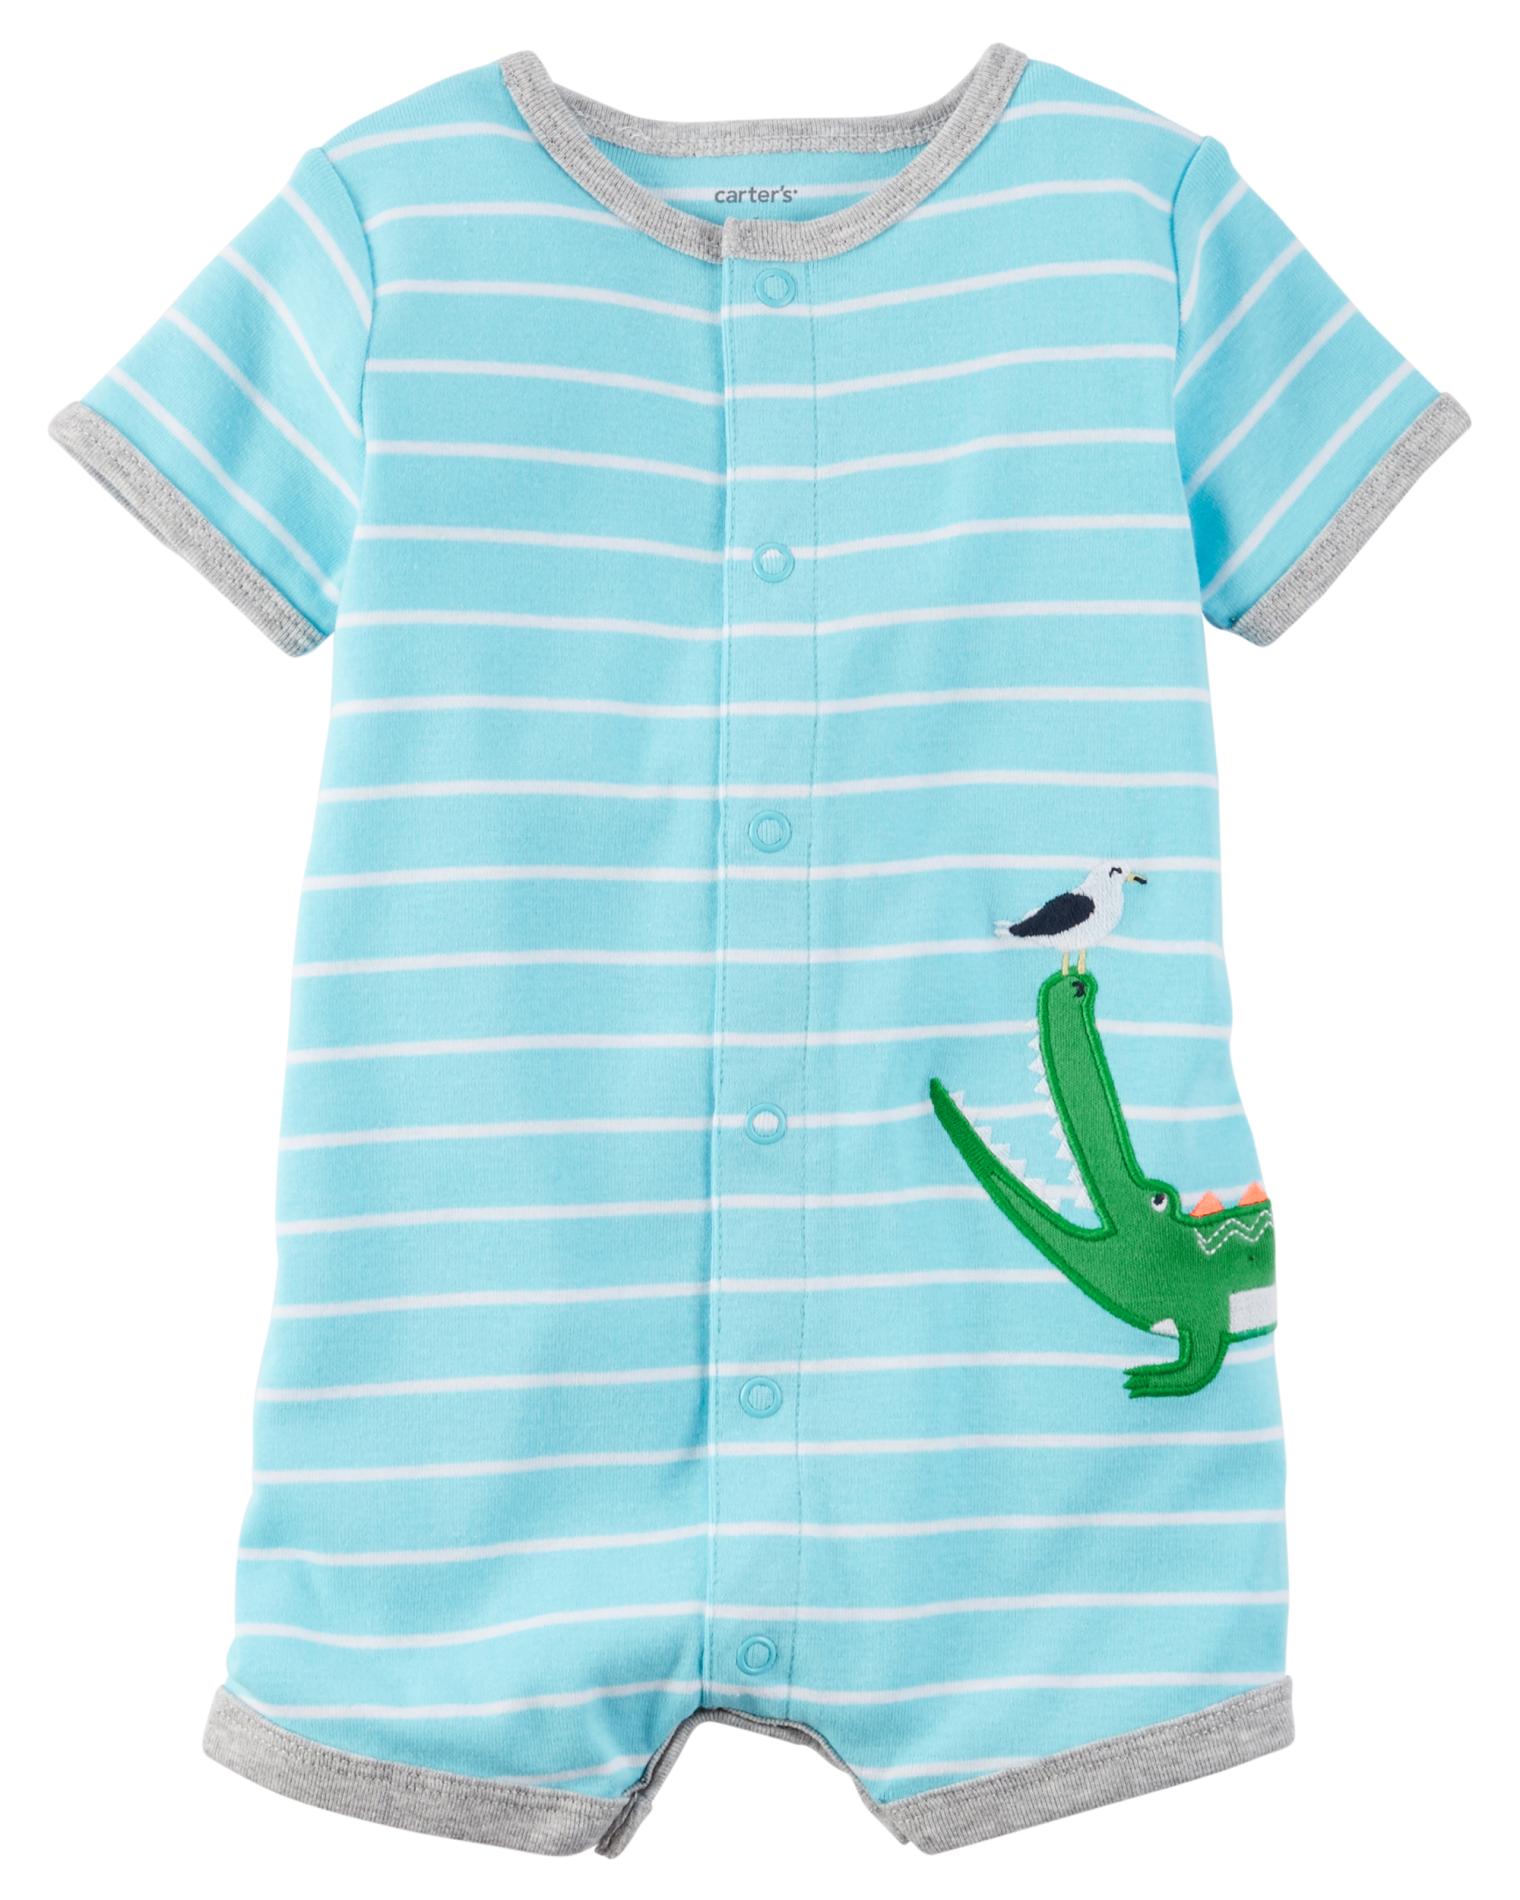 Carter's Newborn & Infant Boys' Short-Sleeve Creeper - Striped & Crocodile